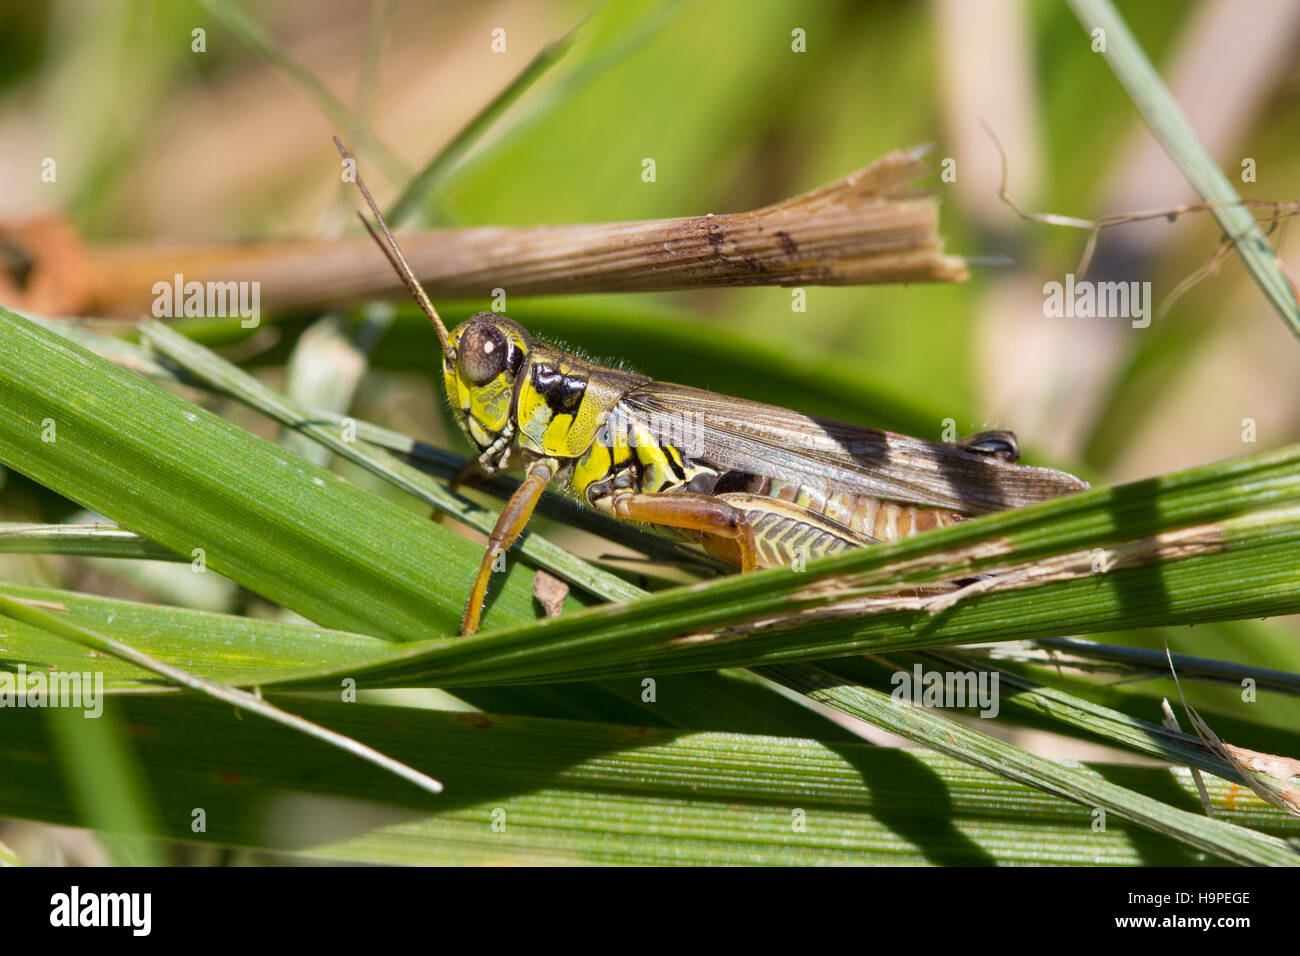 Uno sperone-throated grasshopper (Melanoplinae) seduto su erba, Indiana, Stati Uniti Foto Stock